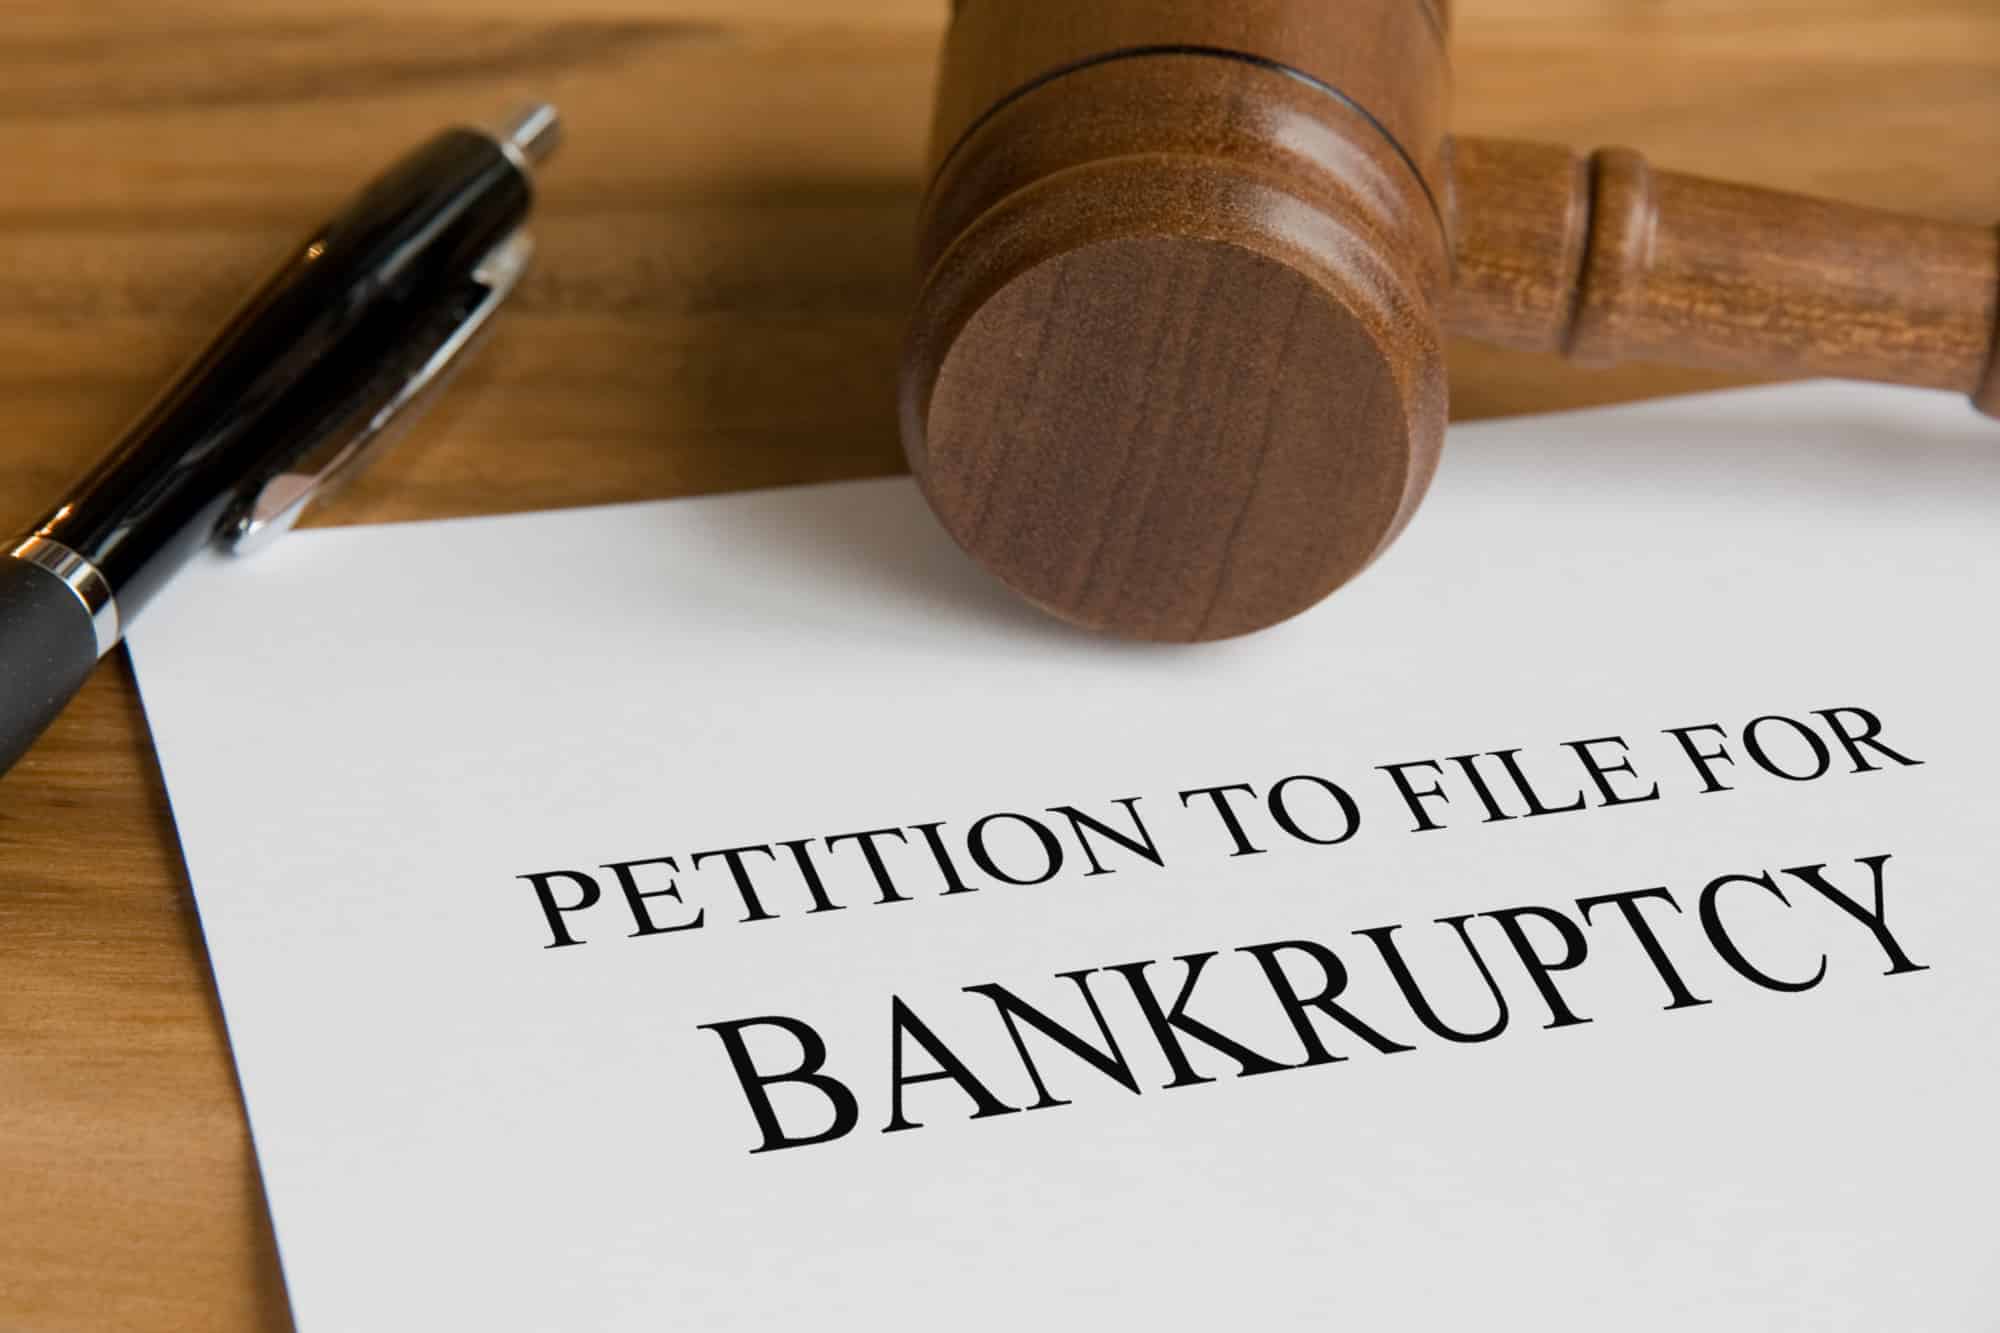 Bankruptcy Basics: When Should You File for Bankruptcy? legalzoom.com